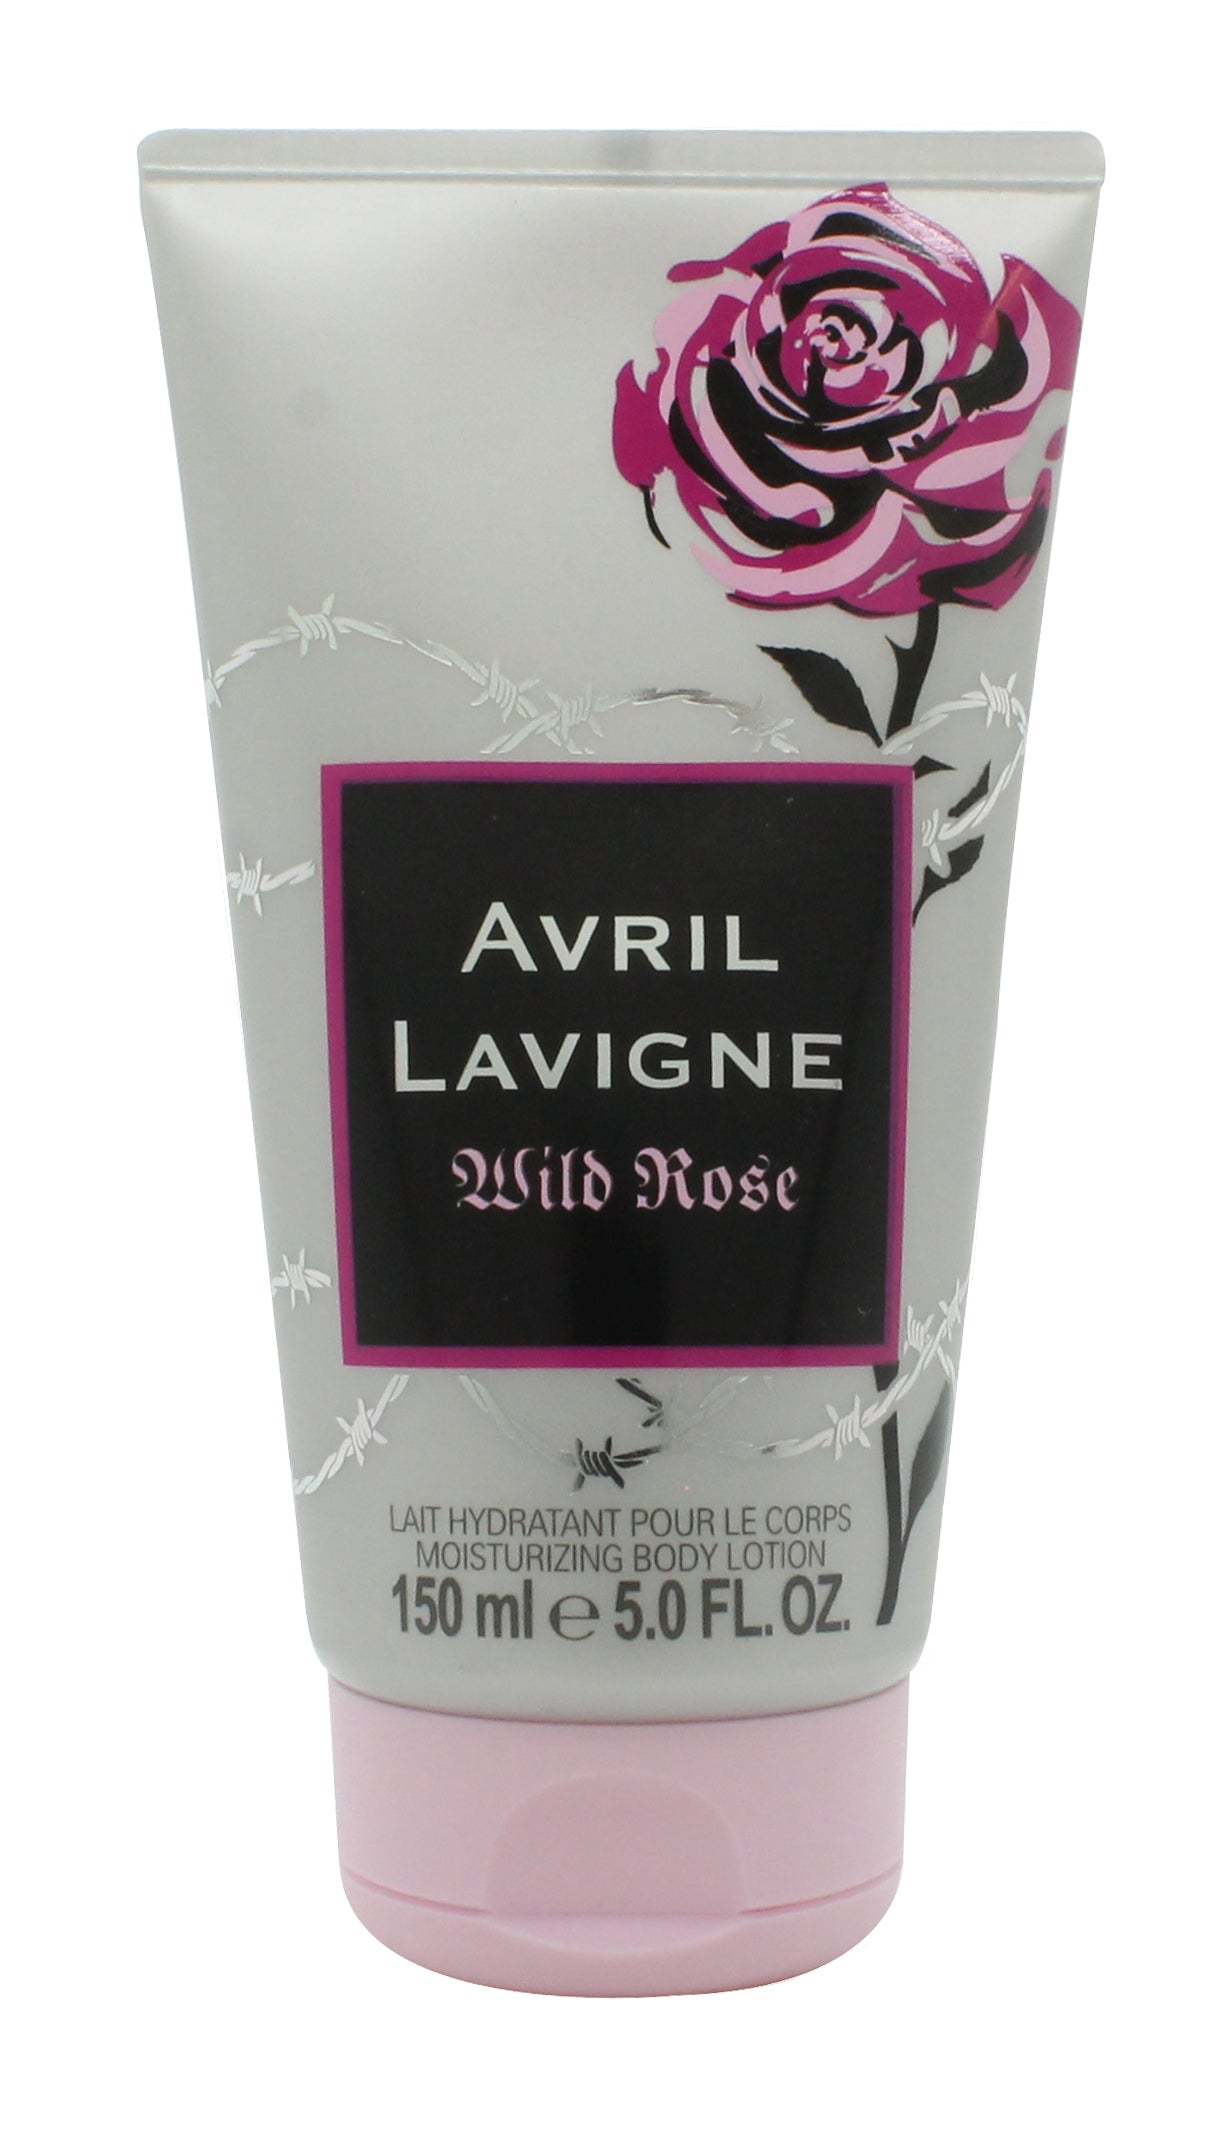 View Avril Lavigne Wild Rose Body Lotion 150ml information